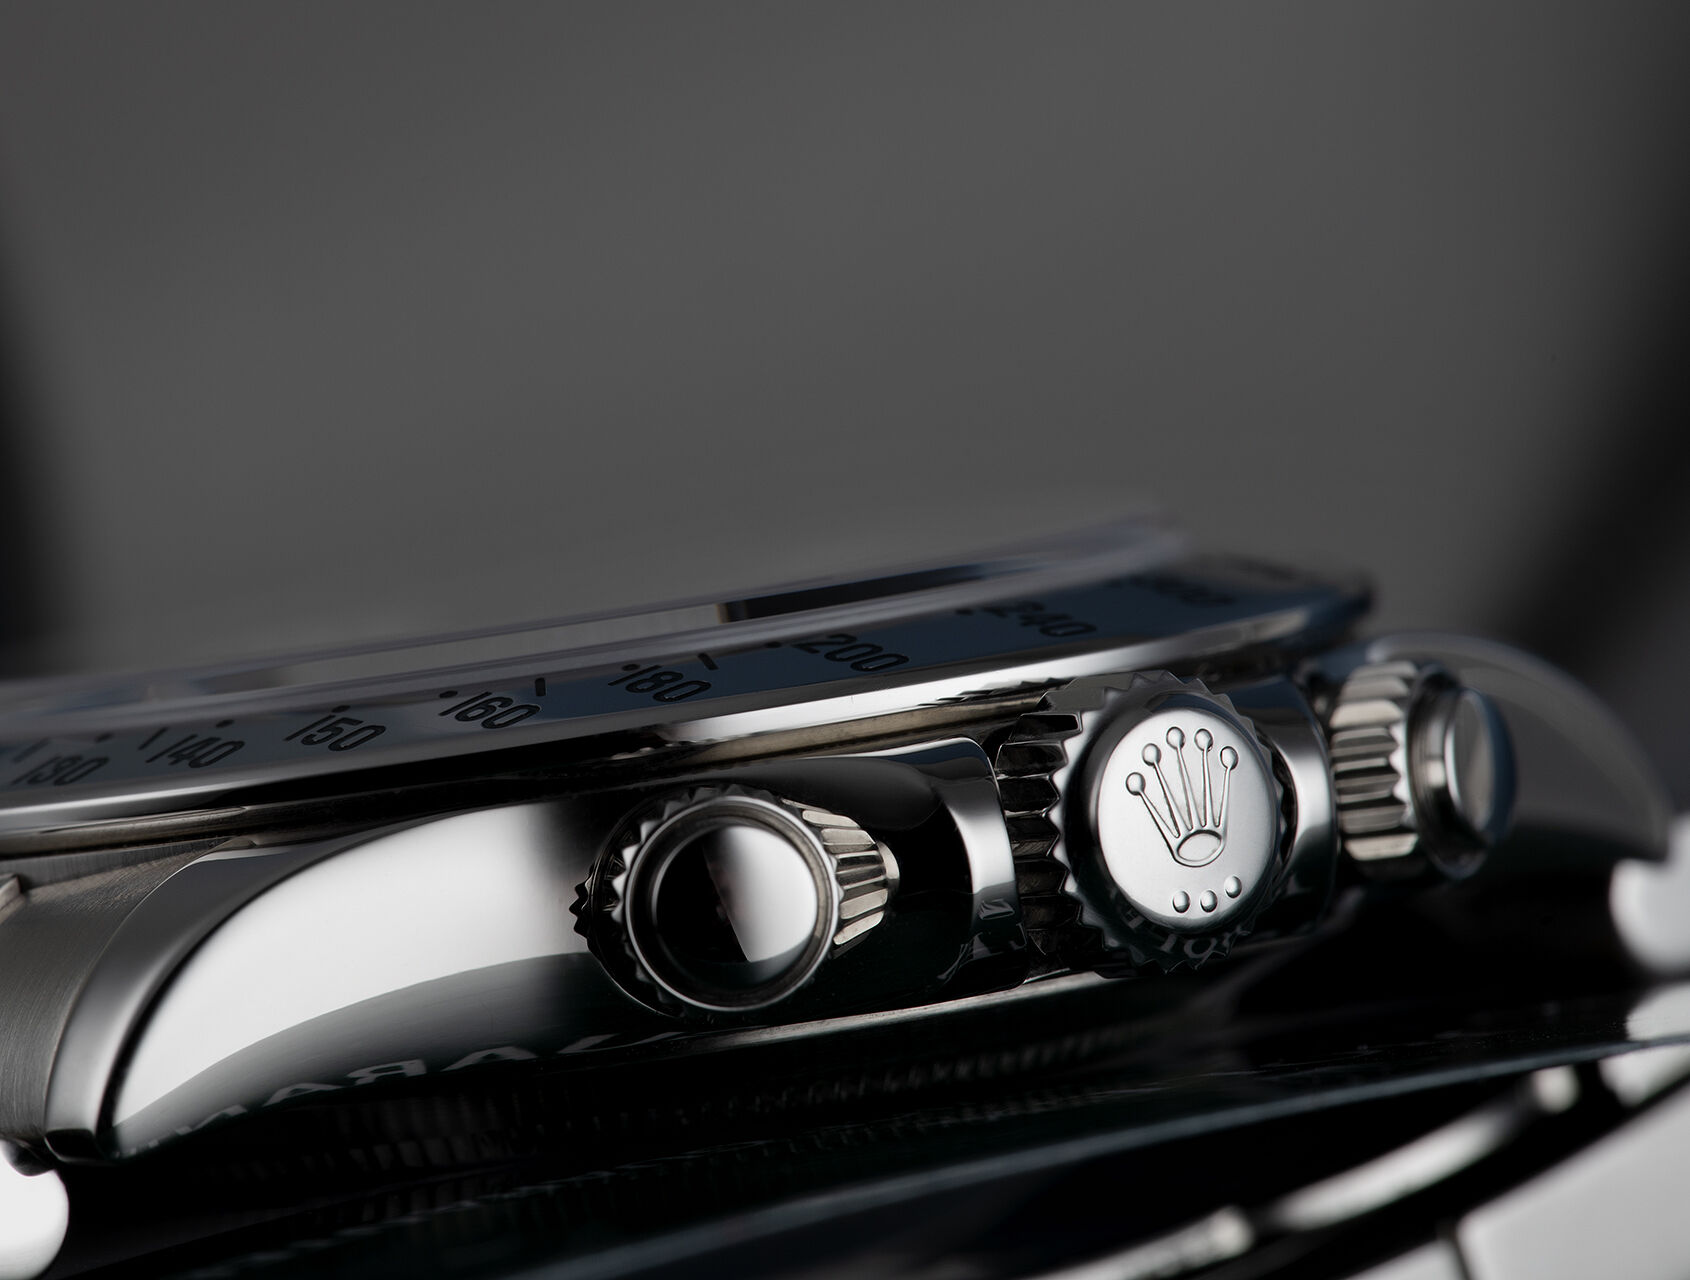 ref 116520 | 'Z Series' | Rolex Cosmograph Daytona